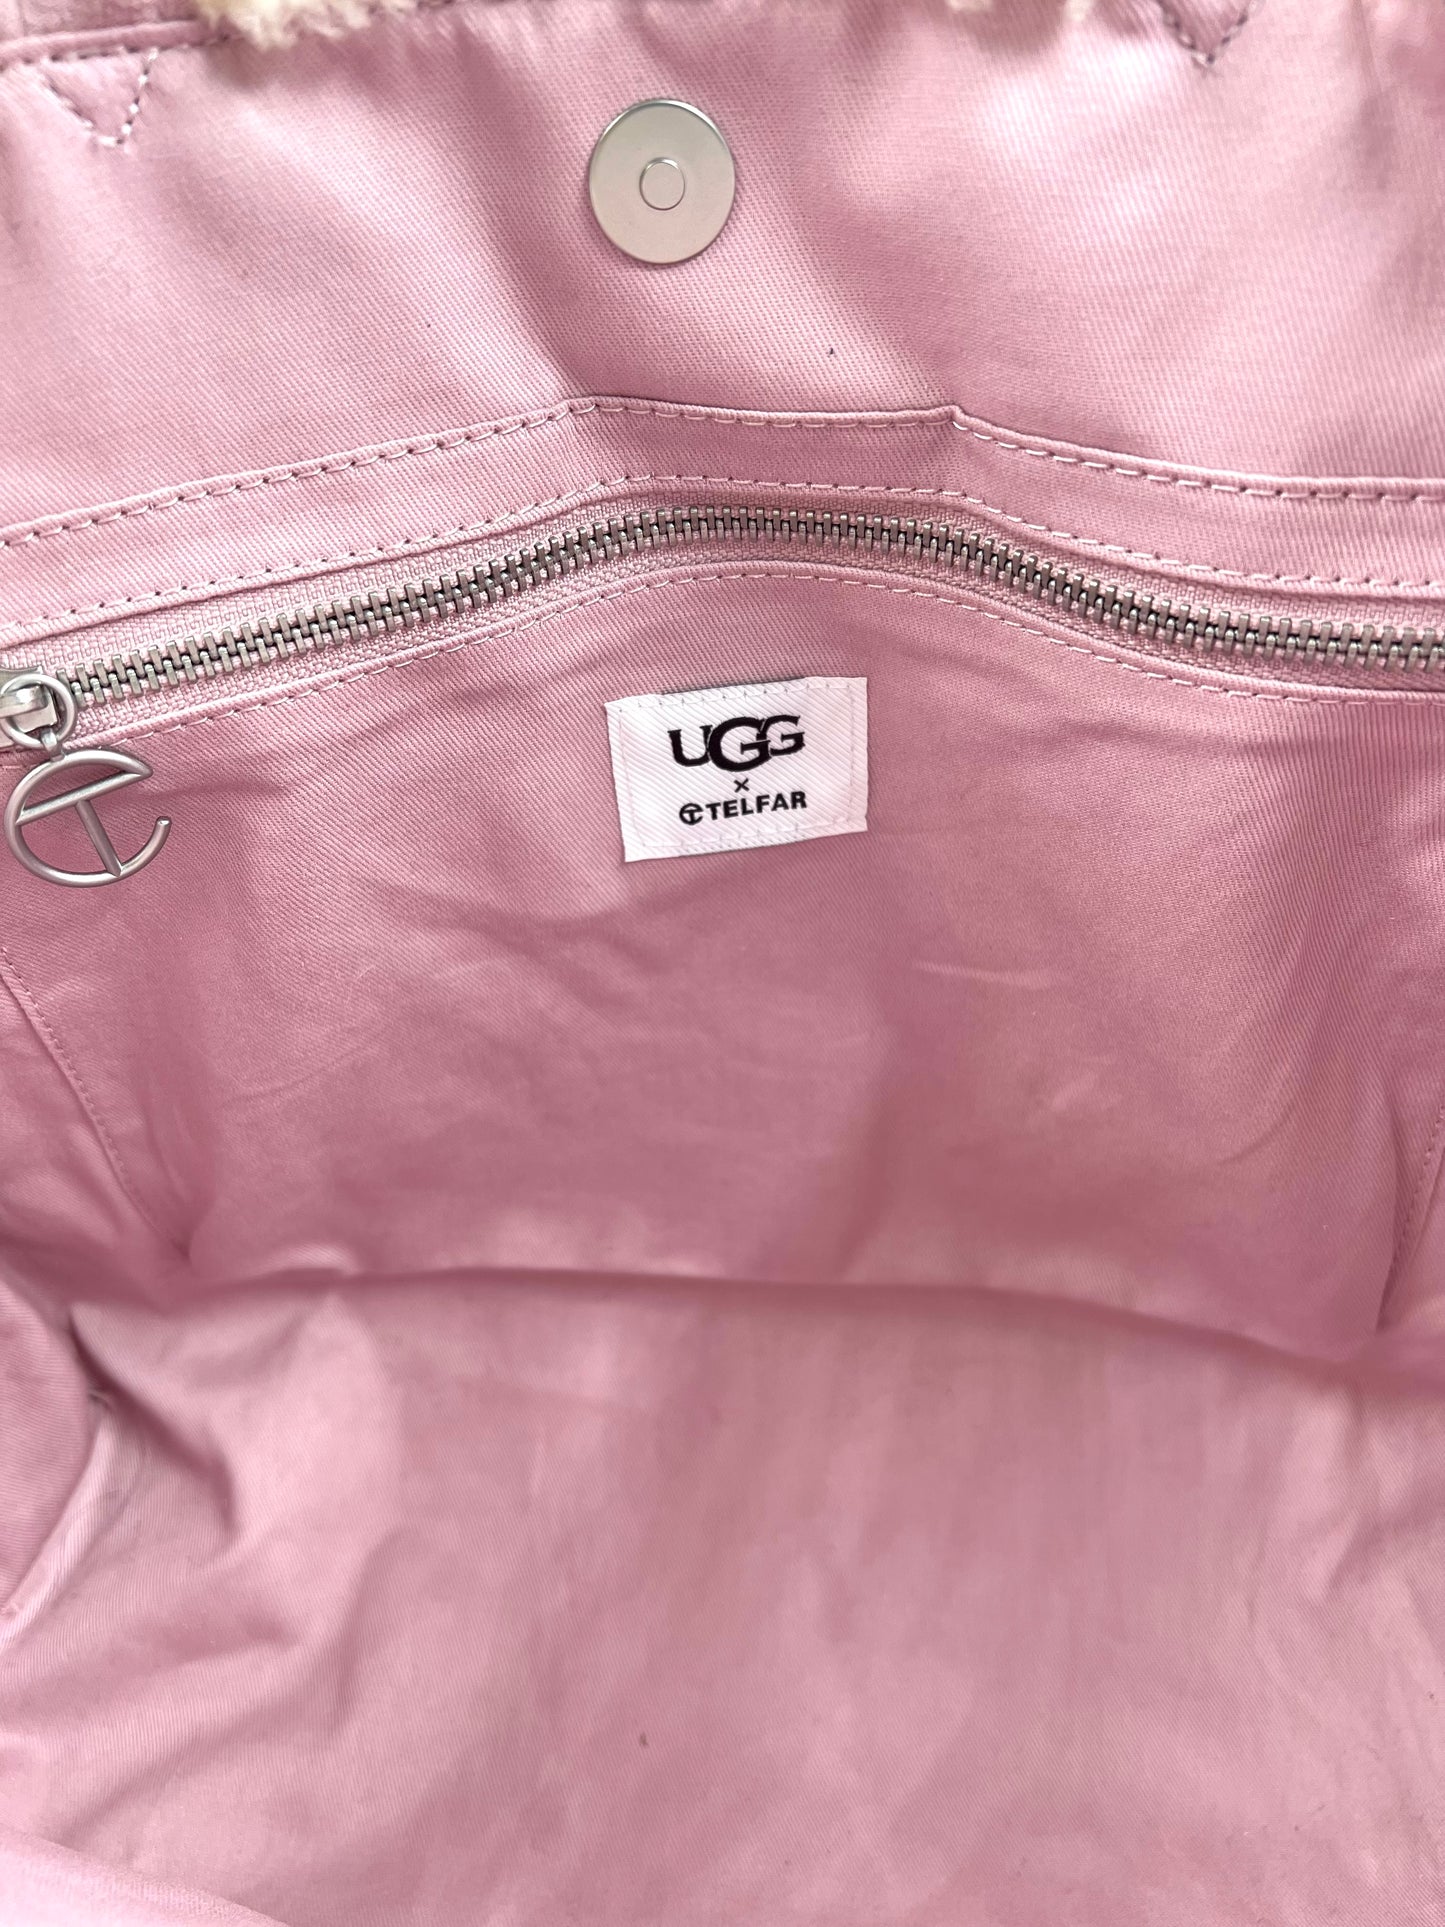 Ugg x Telfar Pink Suede Medium Shopper Tote